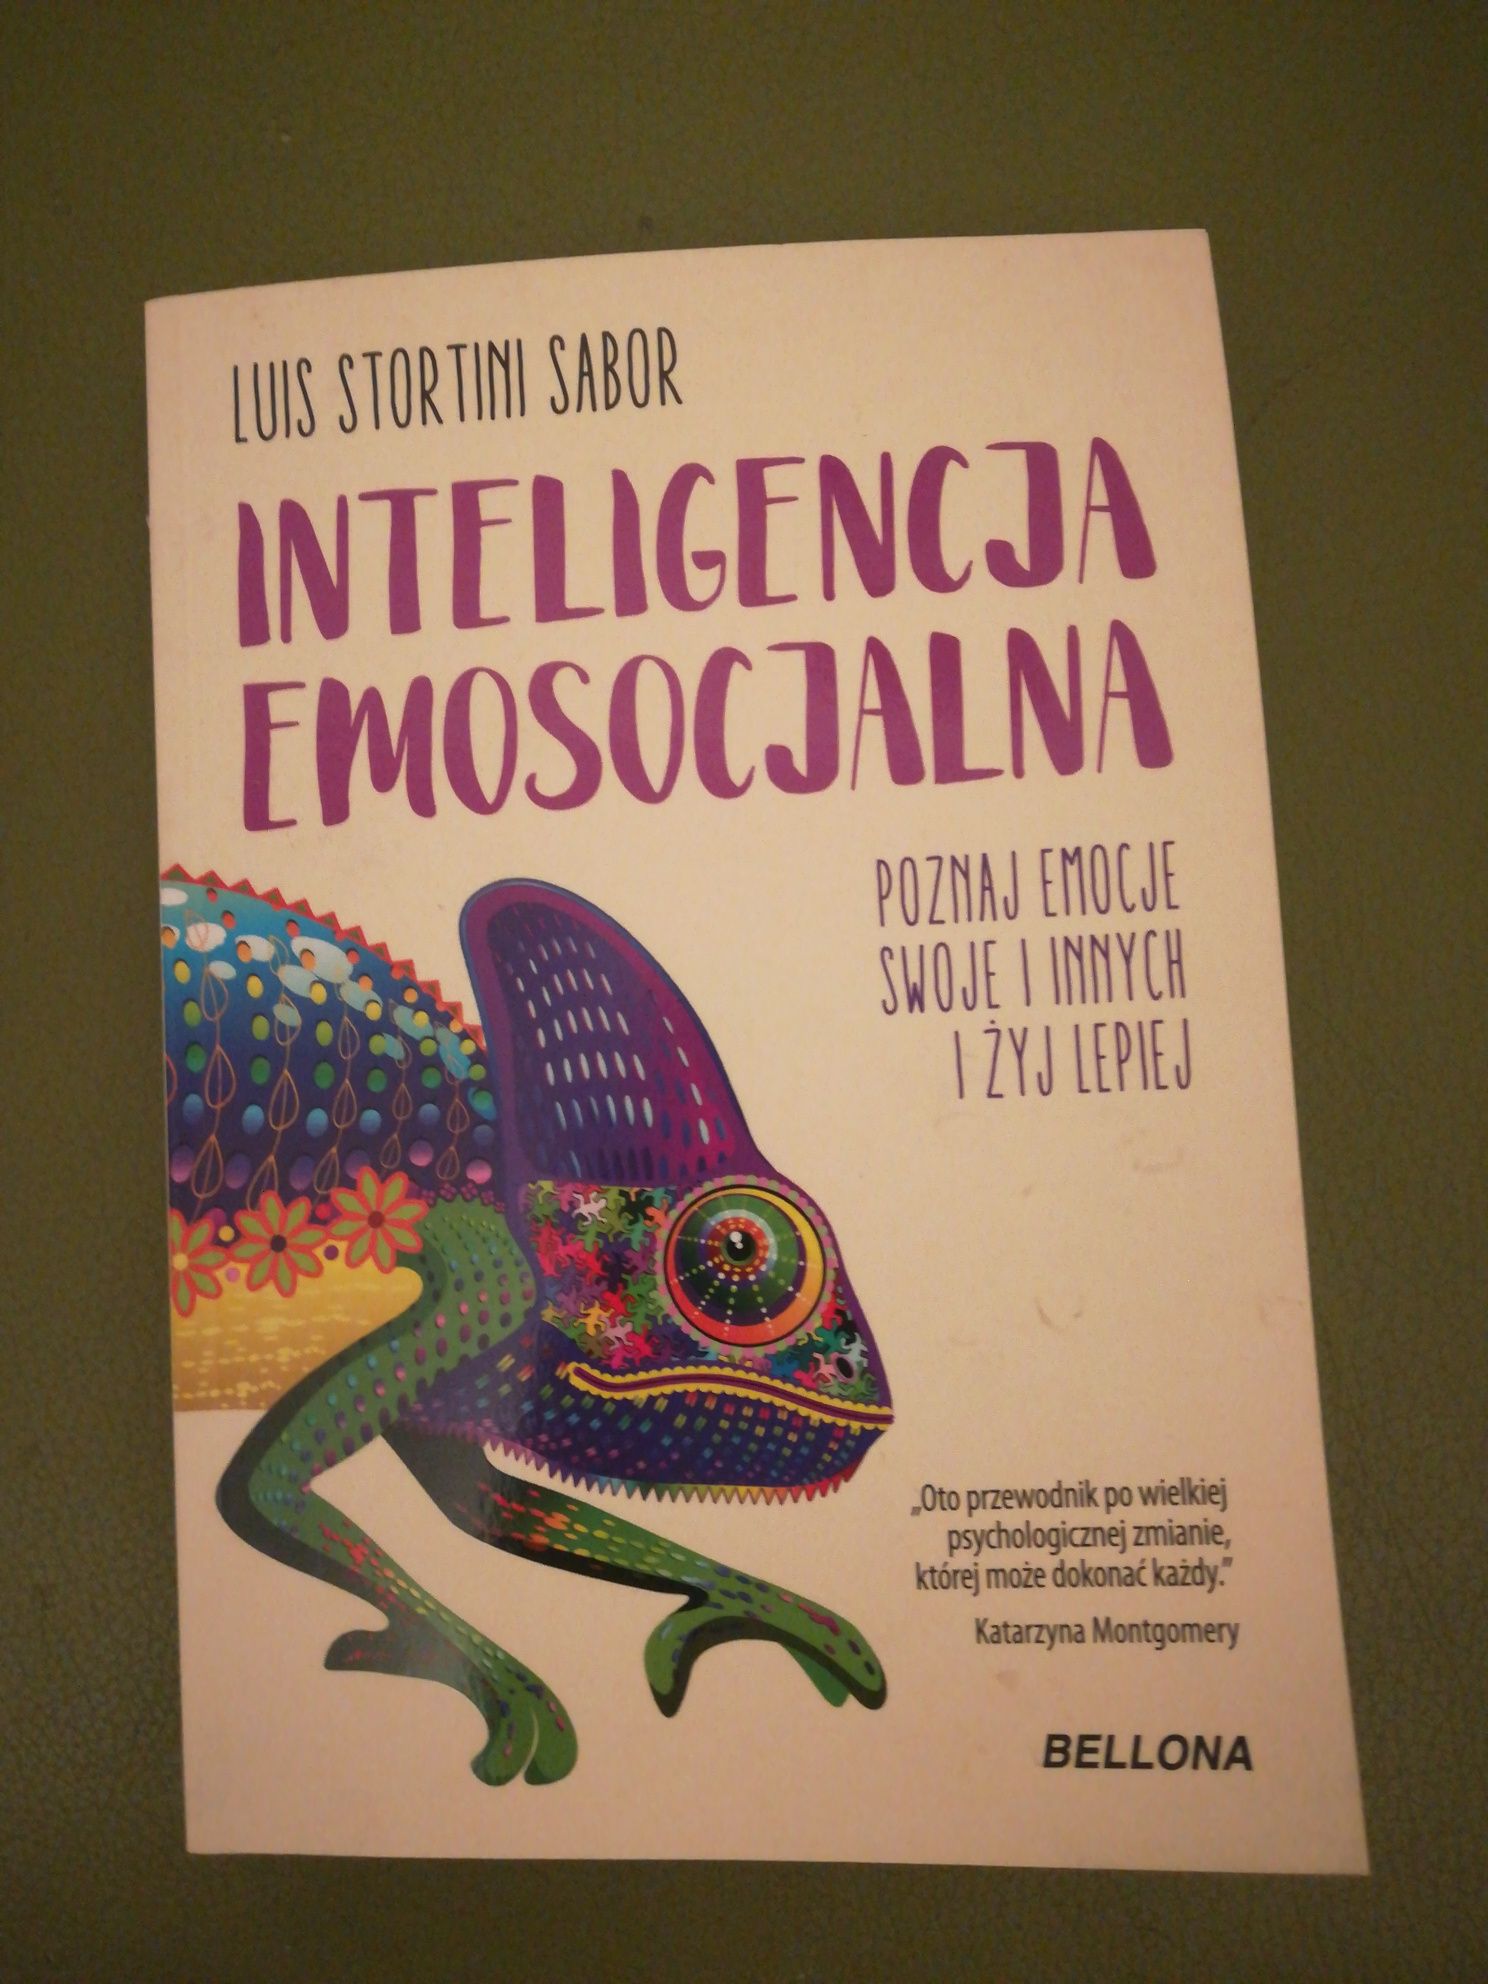 książka "Inteligencja emosocjalna" Luis Stortini Sabor